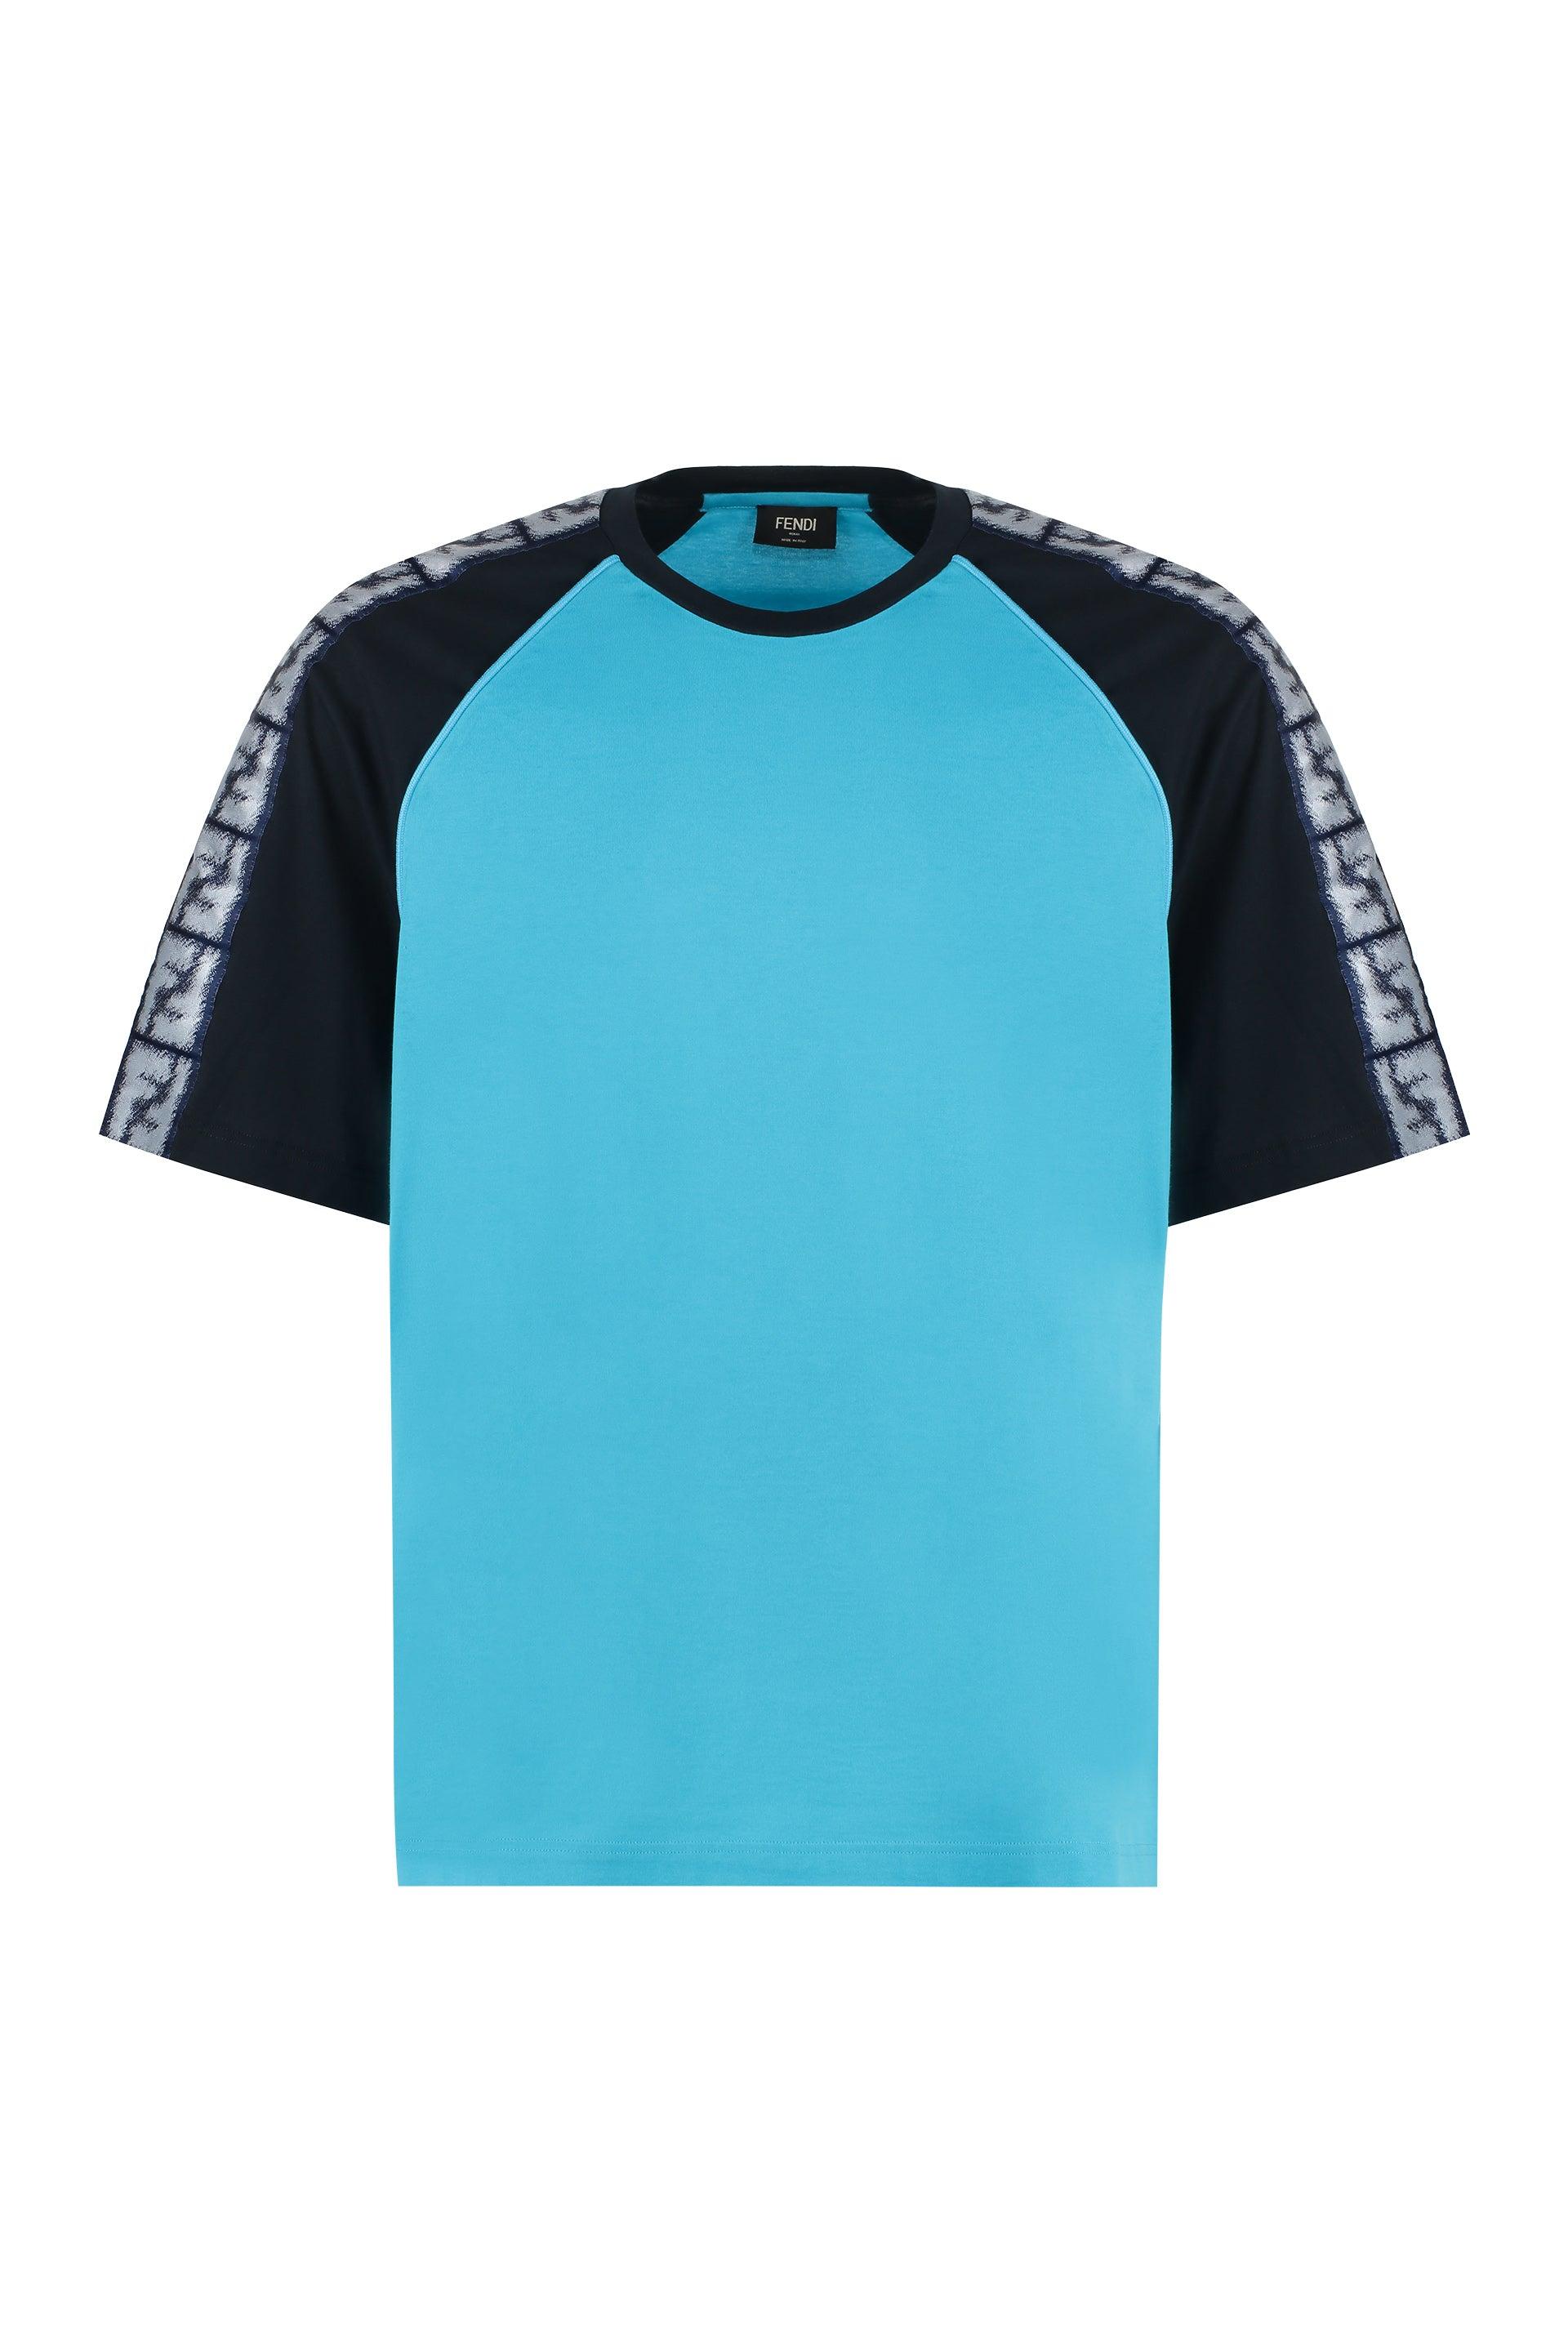 Fendi Cotton Crew-neck T-shirt in Blue for Men | Lyst